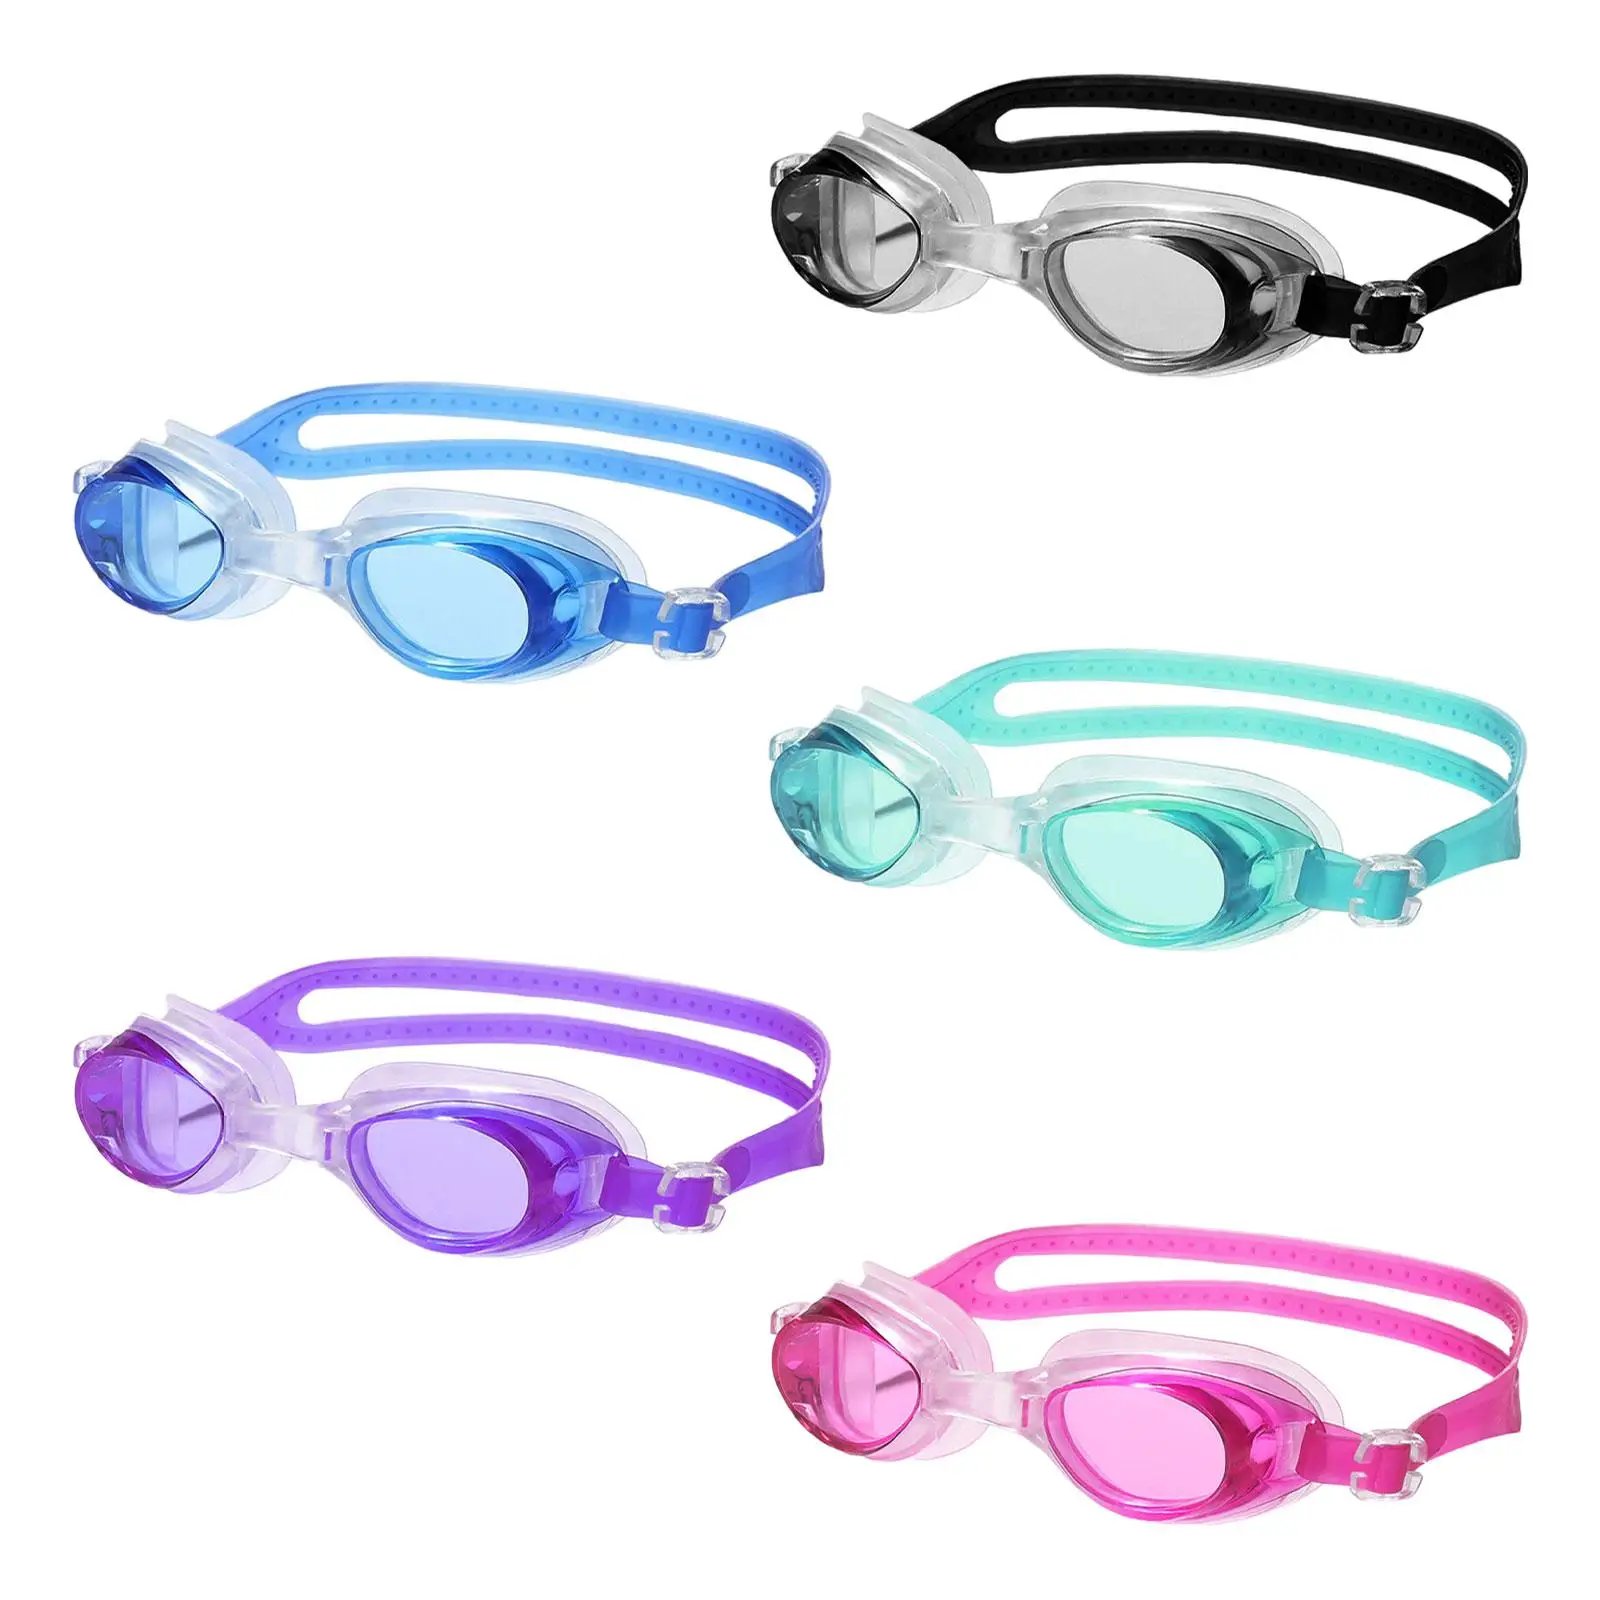 Swim Goggles with Portable Case Anti Fog Soft Silicone Nose Bridge Swimming Goggles Adjustable Swim Glasses for Adult Youth